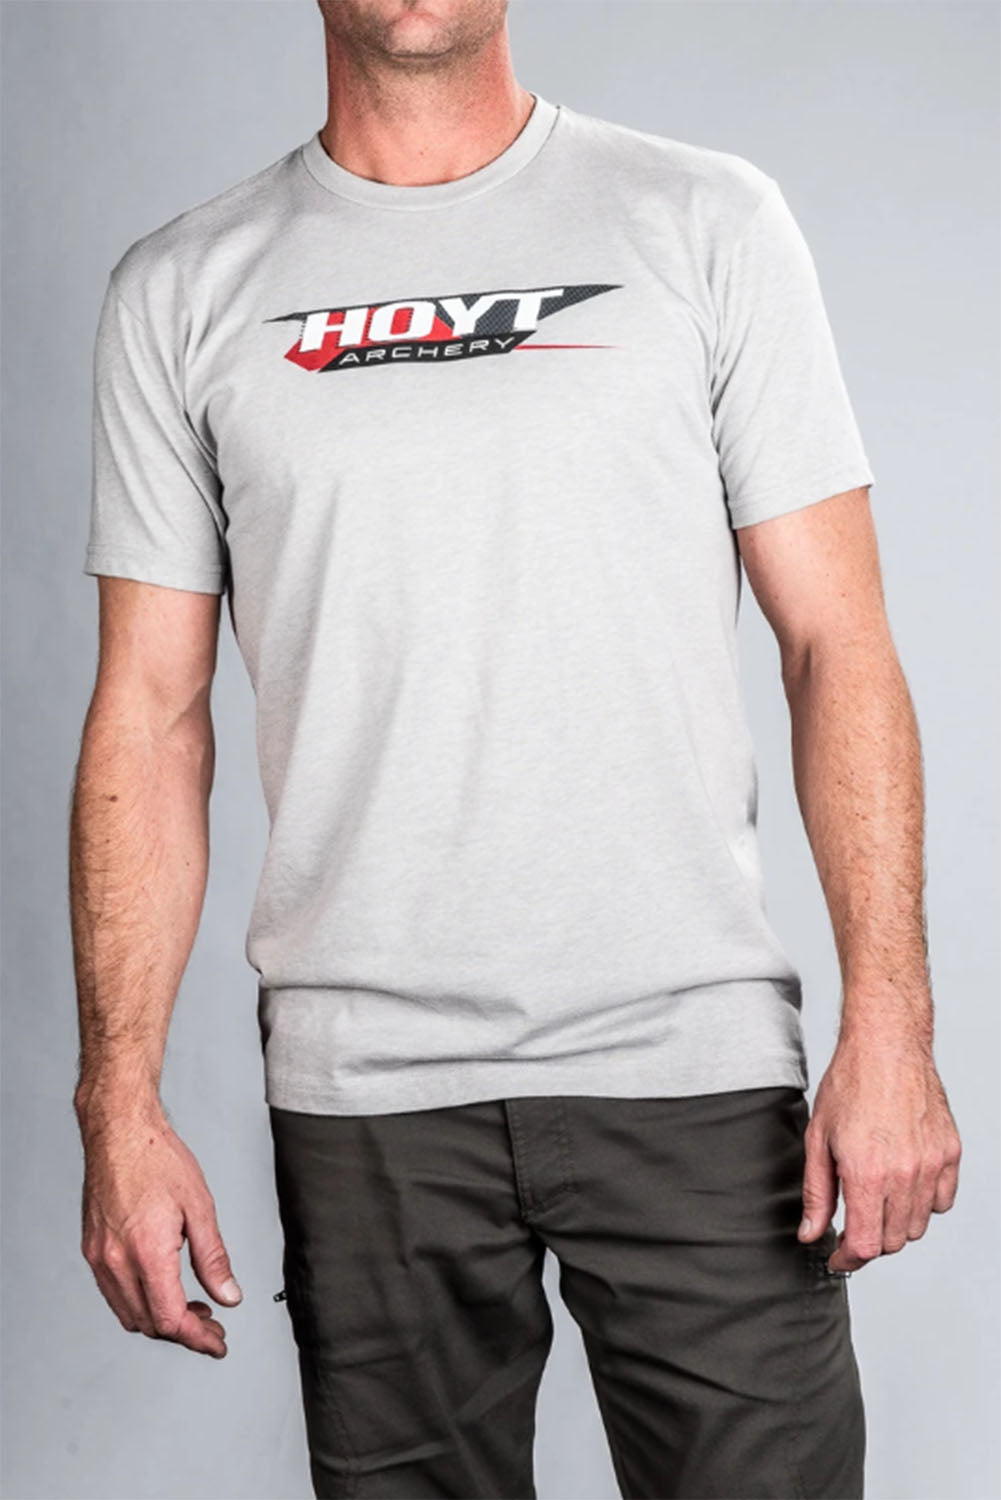 Hoyt Practice Time T-Shirt XX Large - Midwest Archery